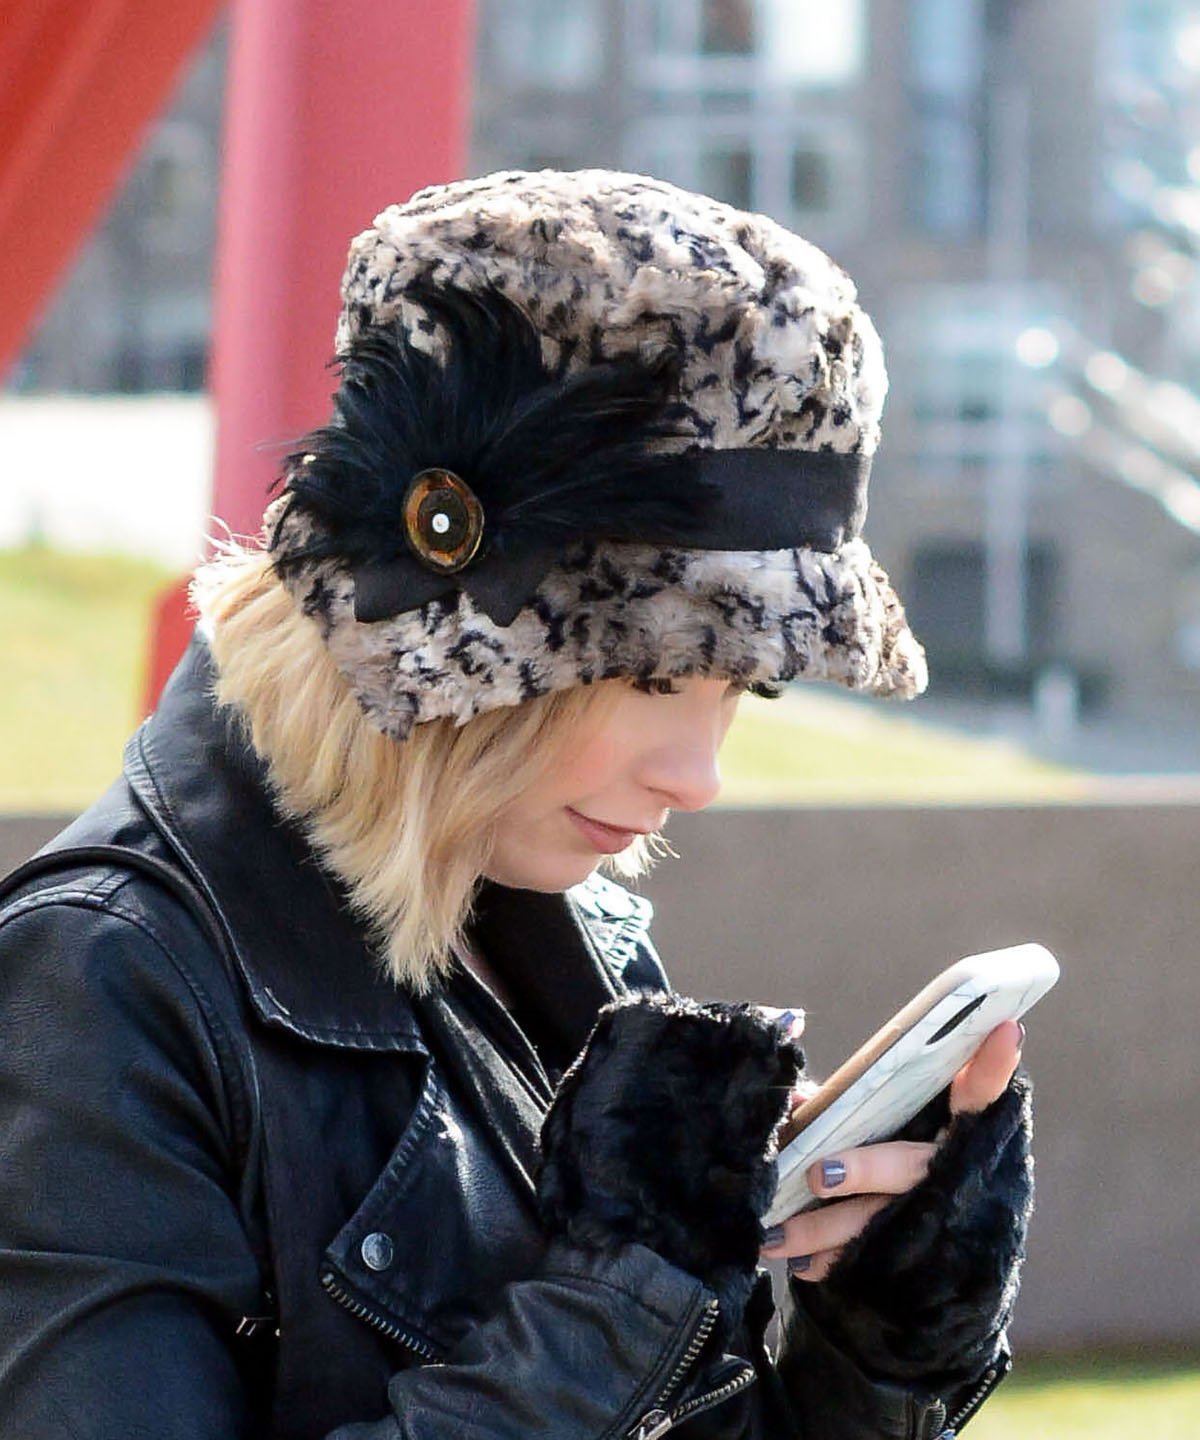 Abigail Style Hat - Luxury Faux Fur in Carpathian Lynx with Black Faux Suede Medium / Faux Suede Cross-Over Band - Black / Feather - Black Fan / Button - Black & Gold Capiz Shell Hats Pandemonium Millinery